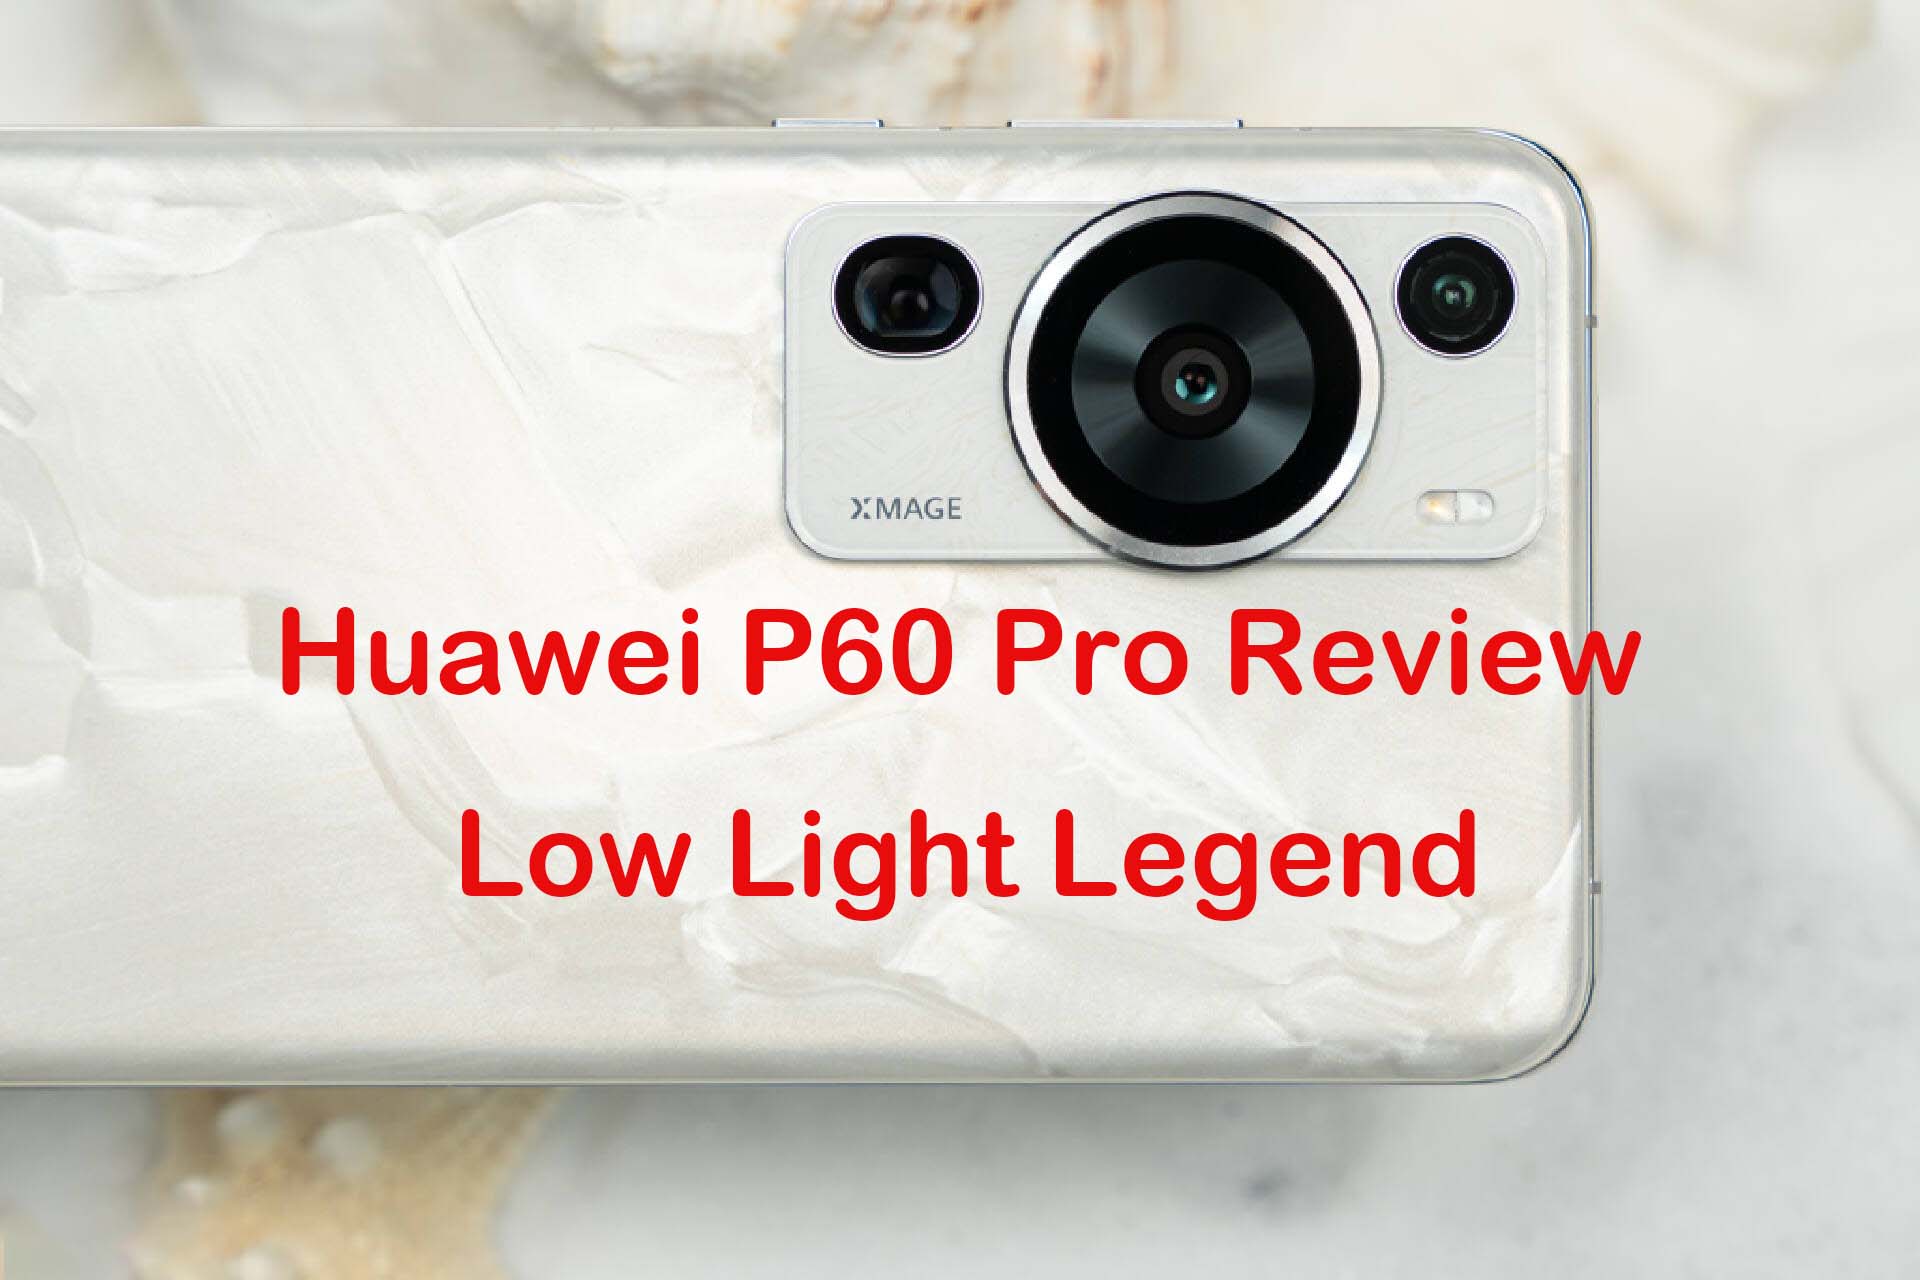 Huawei P60 Pro Review: Low Light Legend